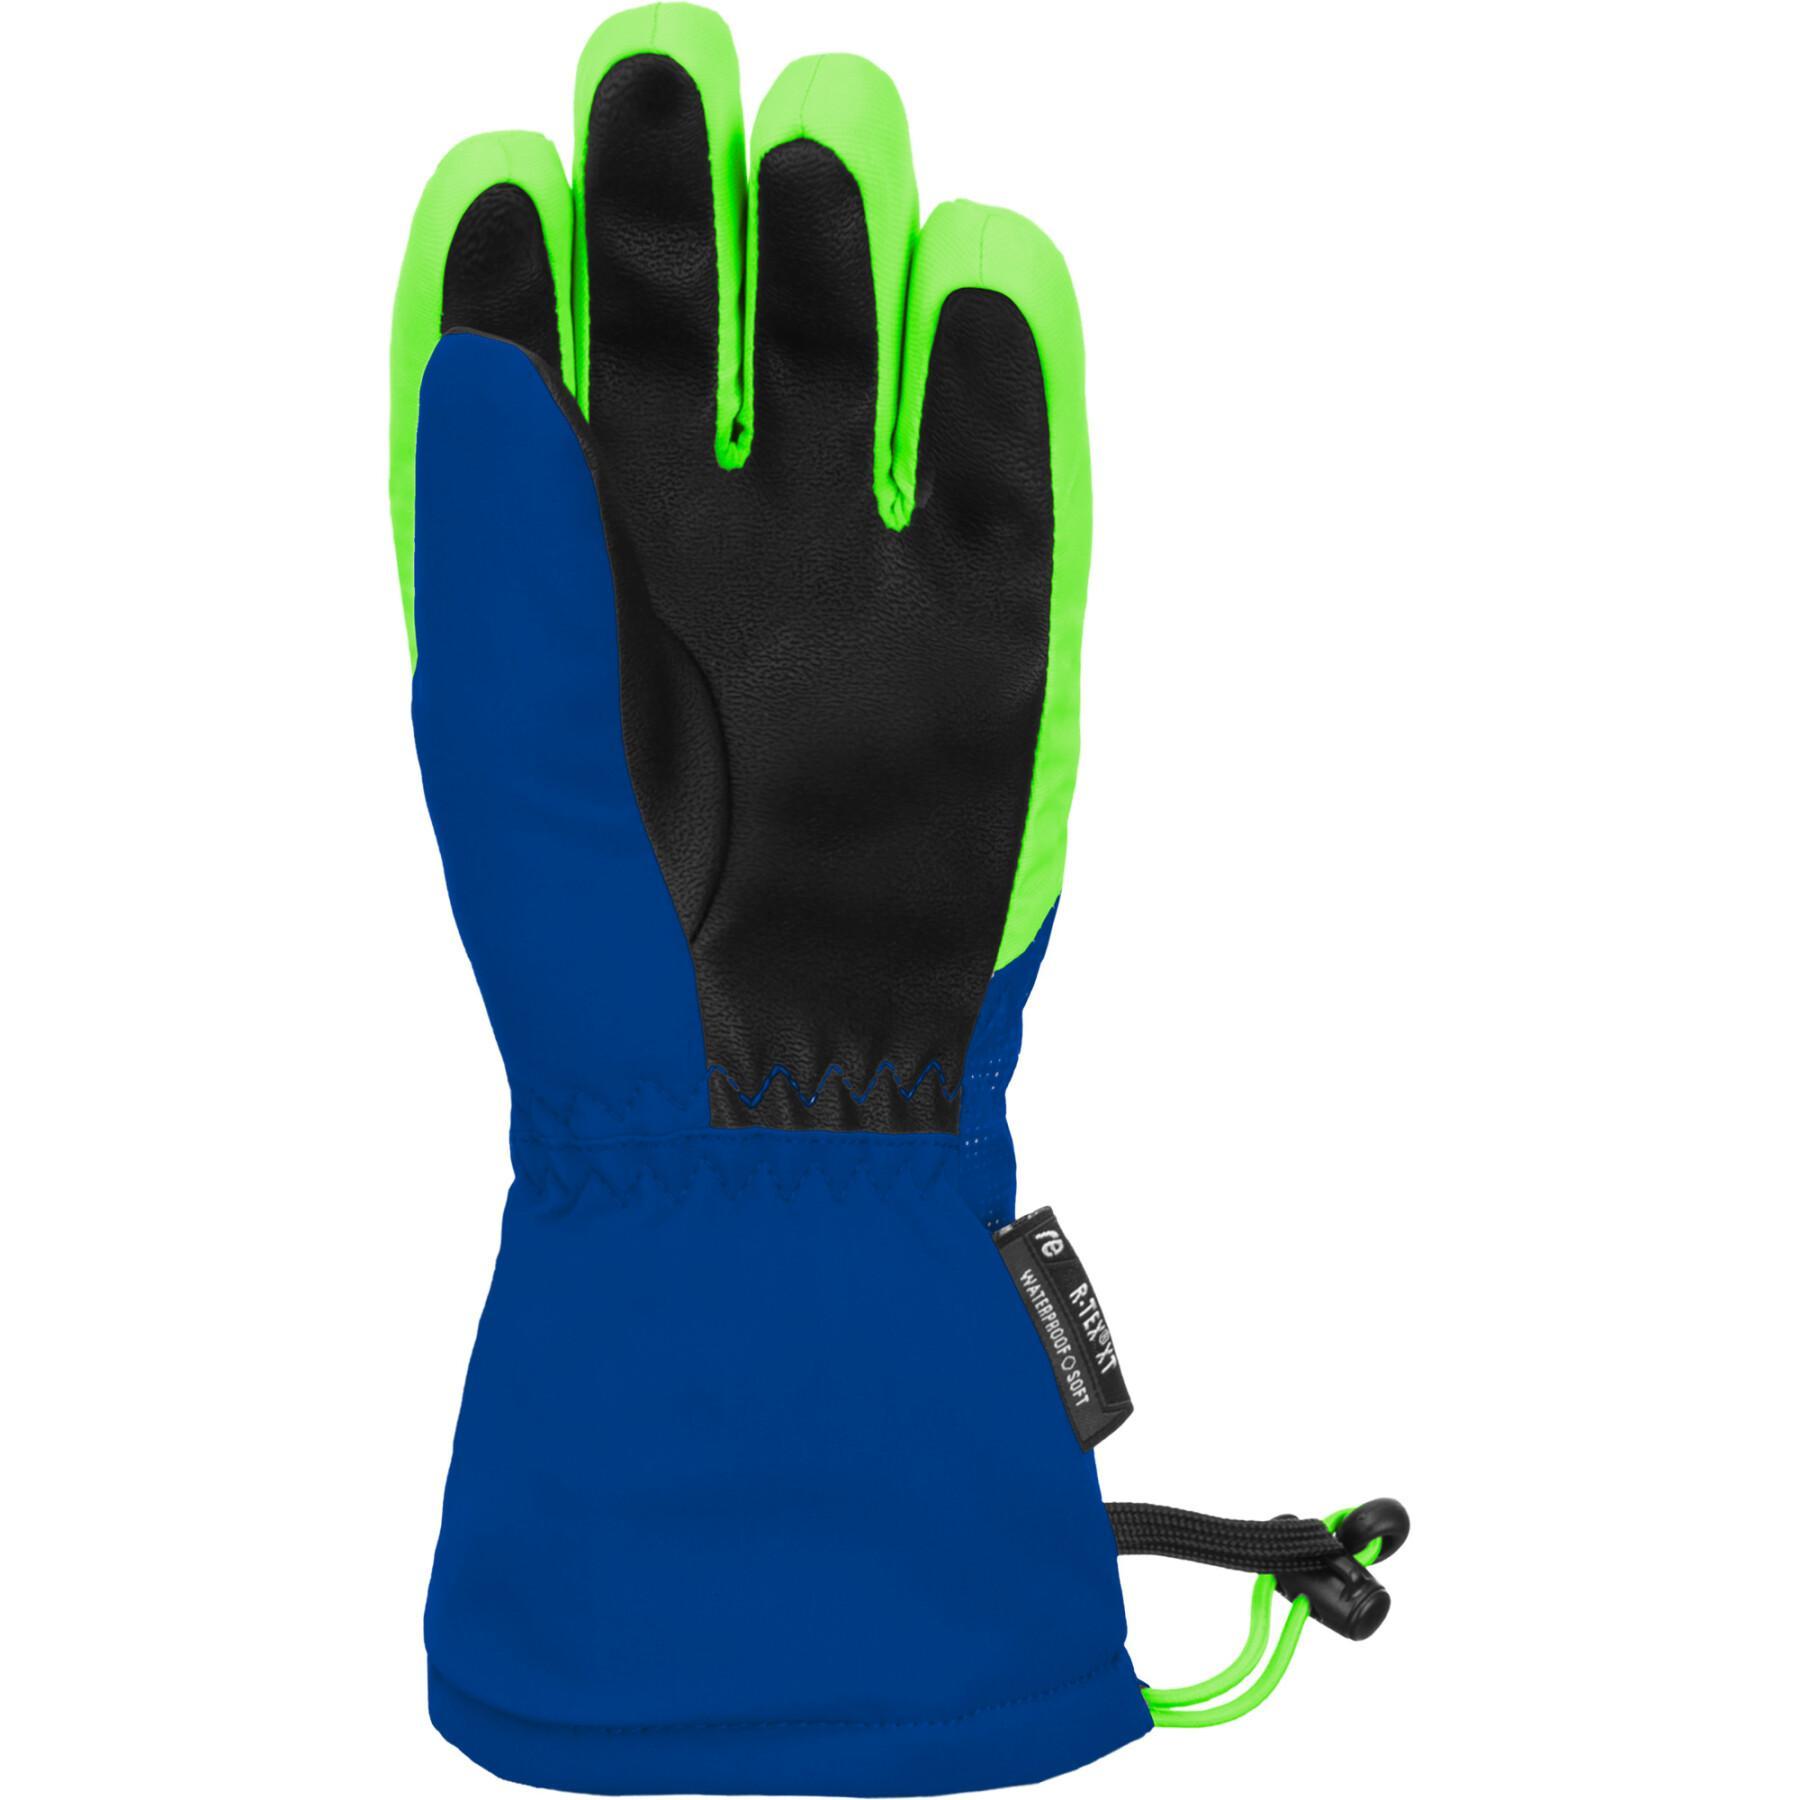 Children's ski gloves Reusch Maxi R-Tex® XT